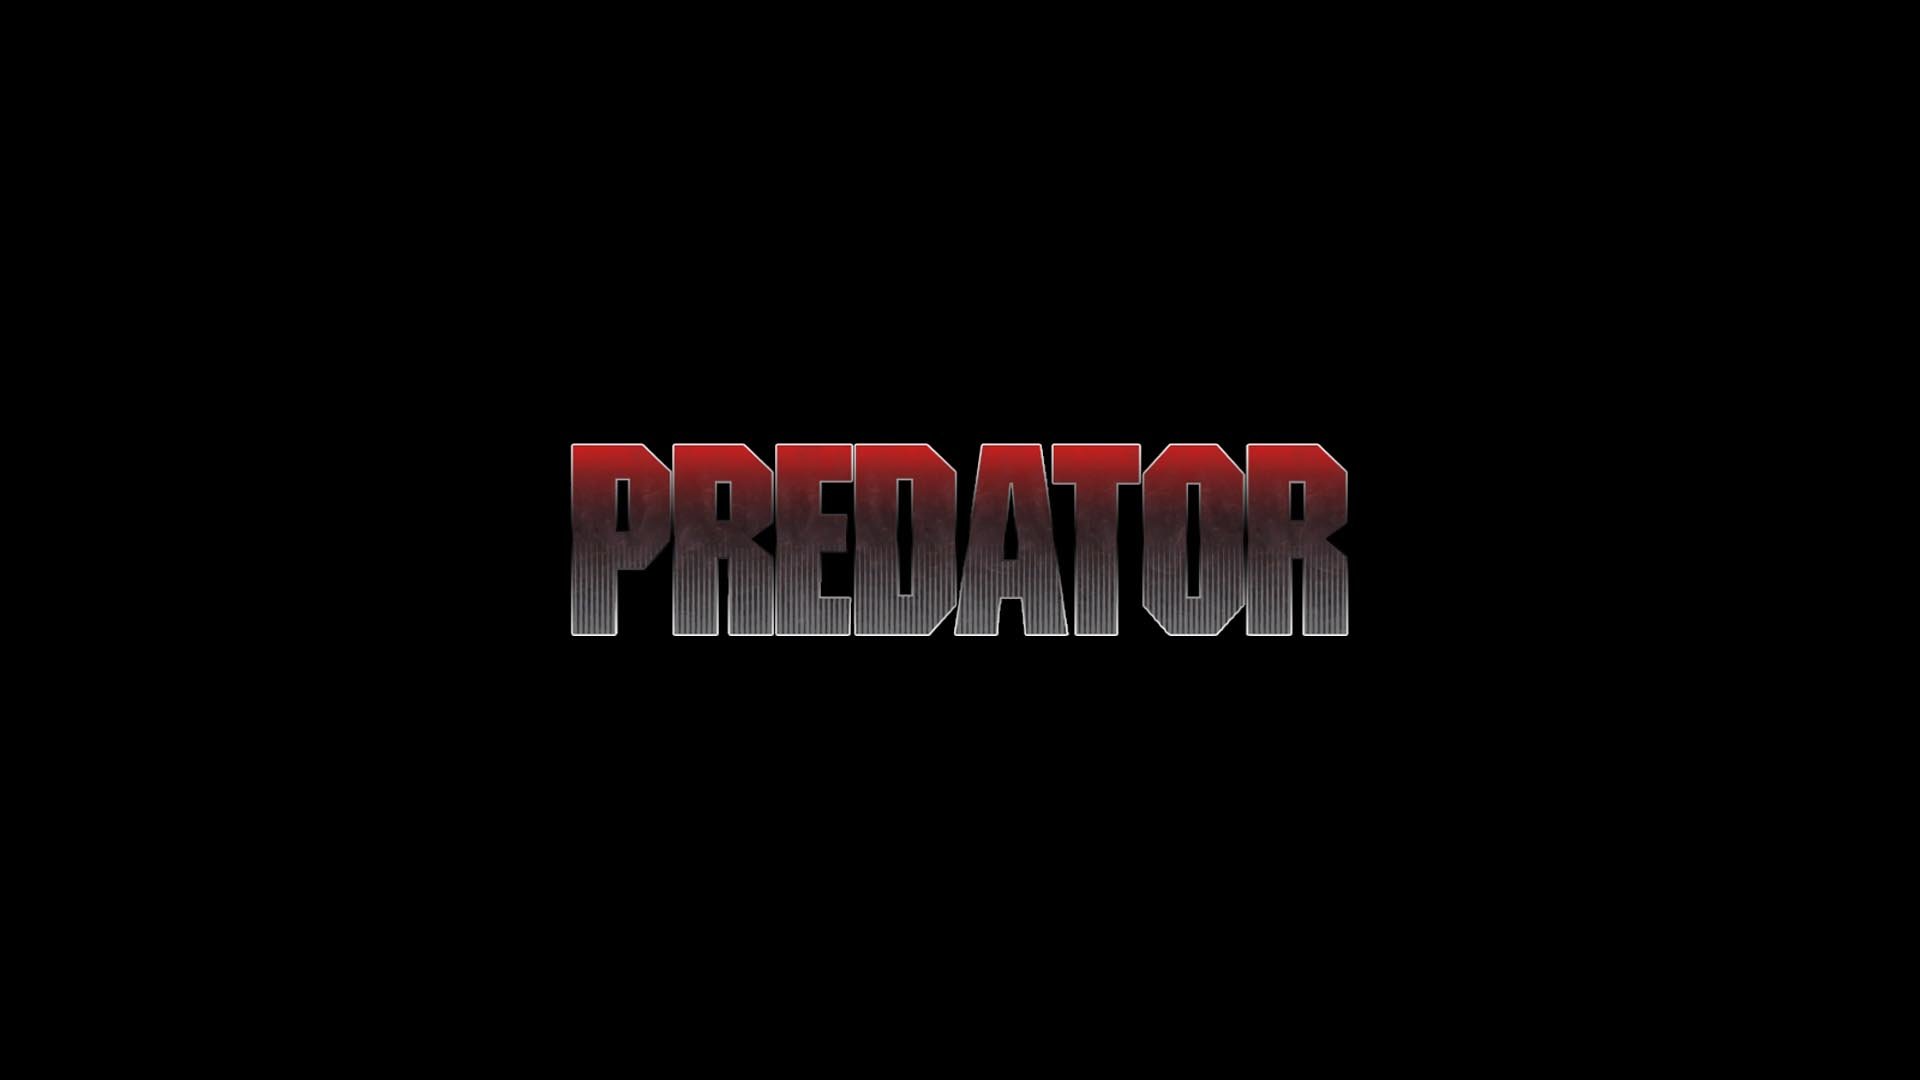 Free Predator high quality wallpaper ID:242020 for full hd desktop